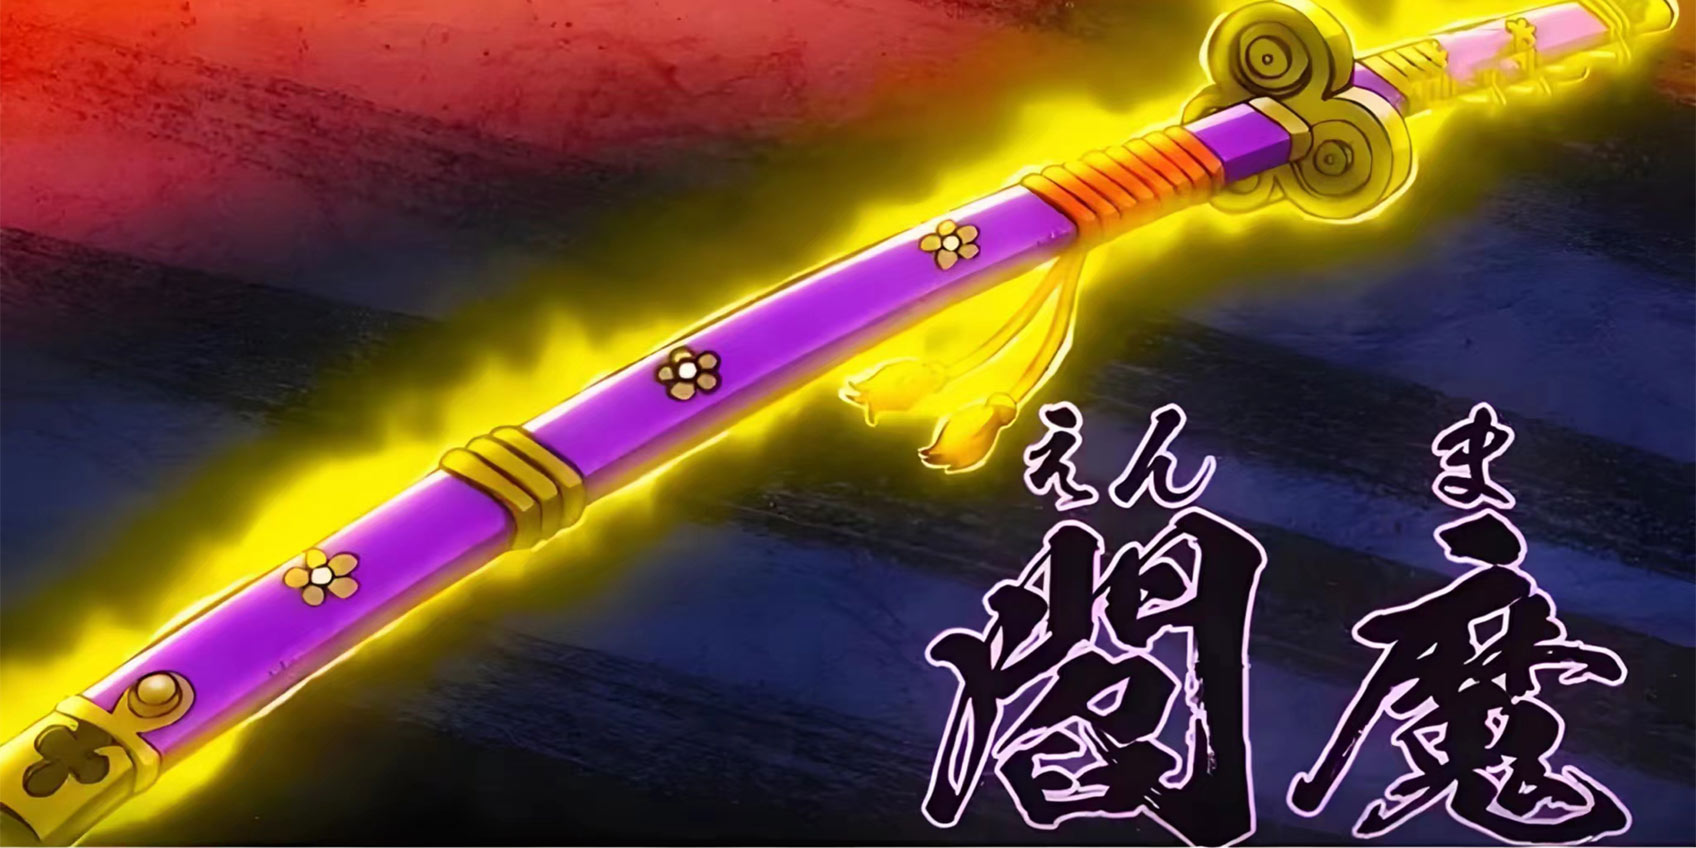 The Blade of Ultimate Challenge: Zoro's Enma Sword